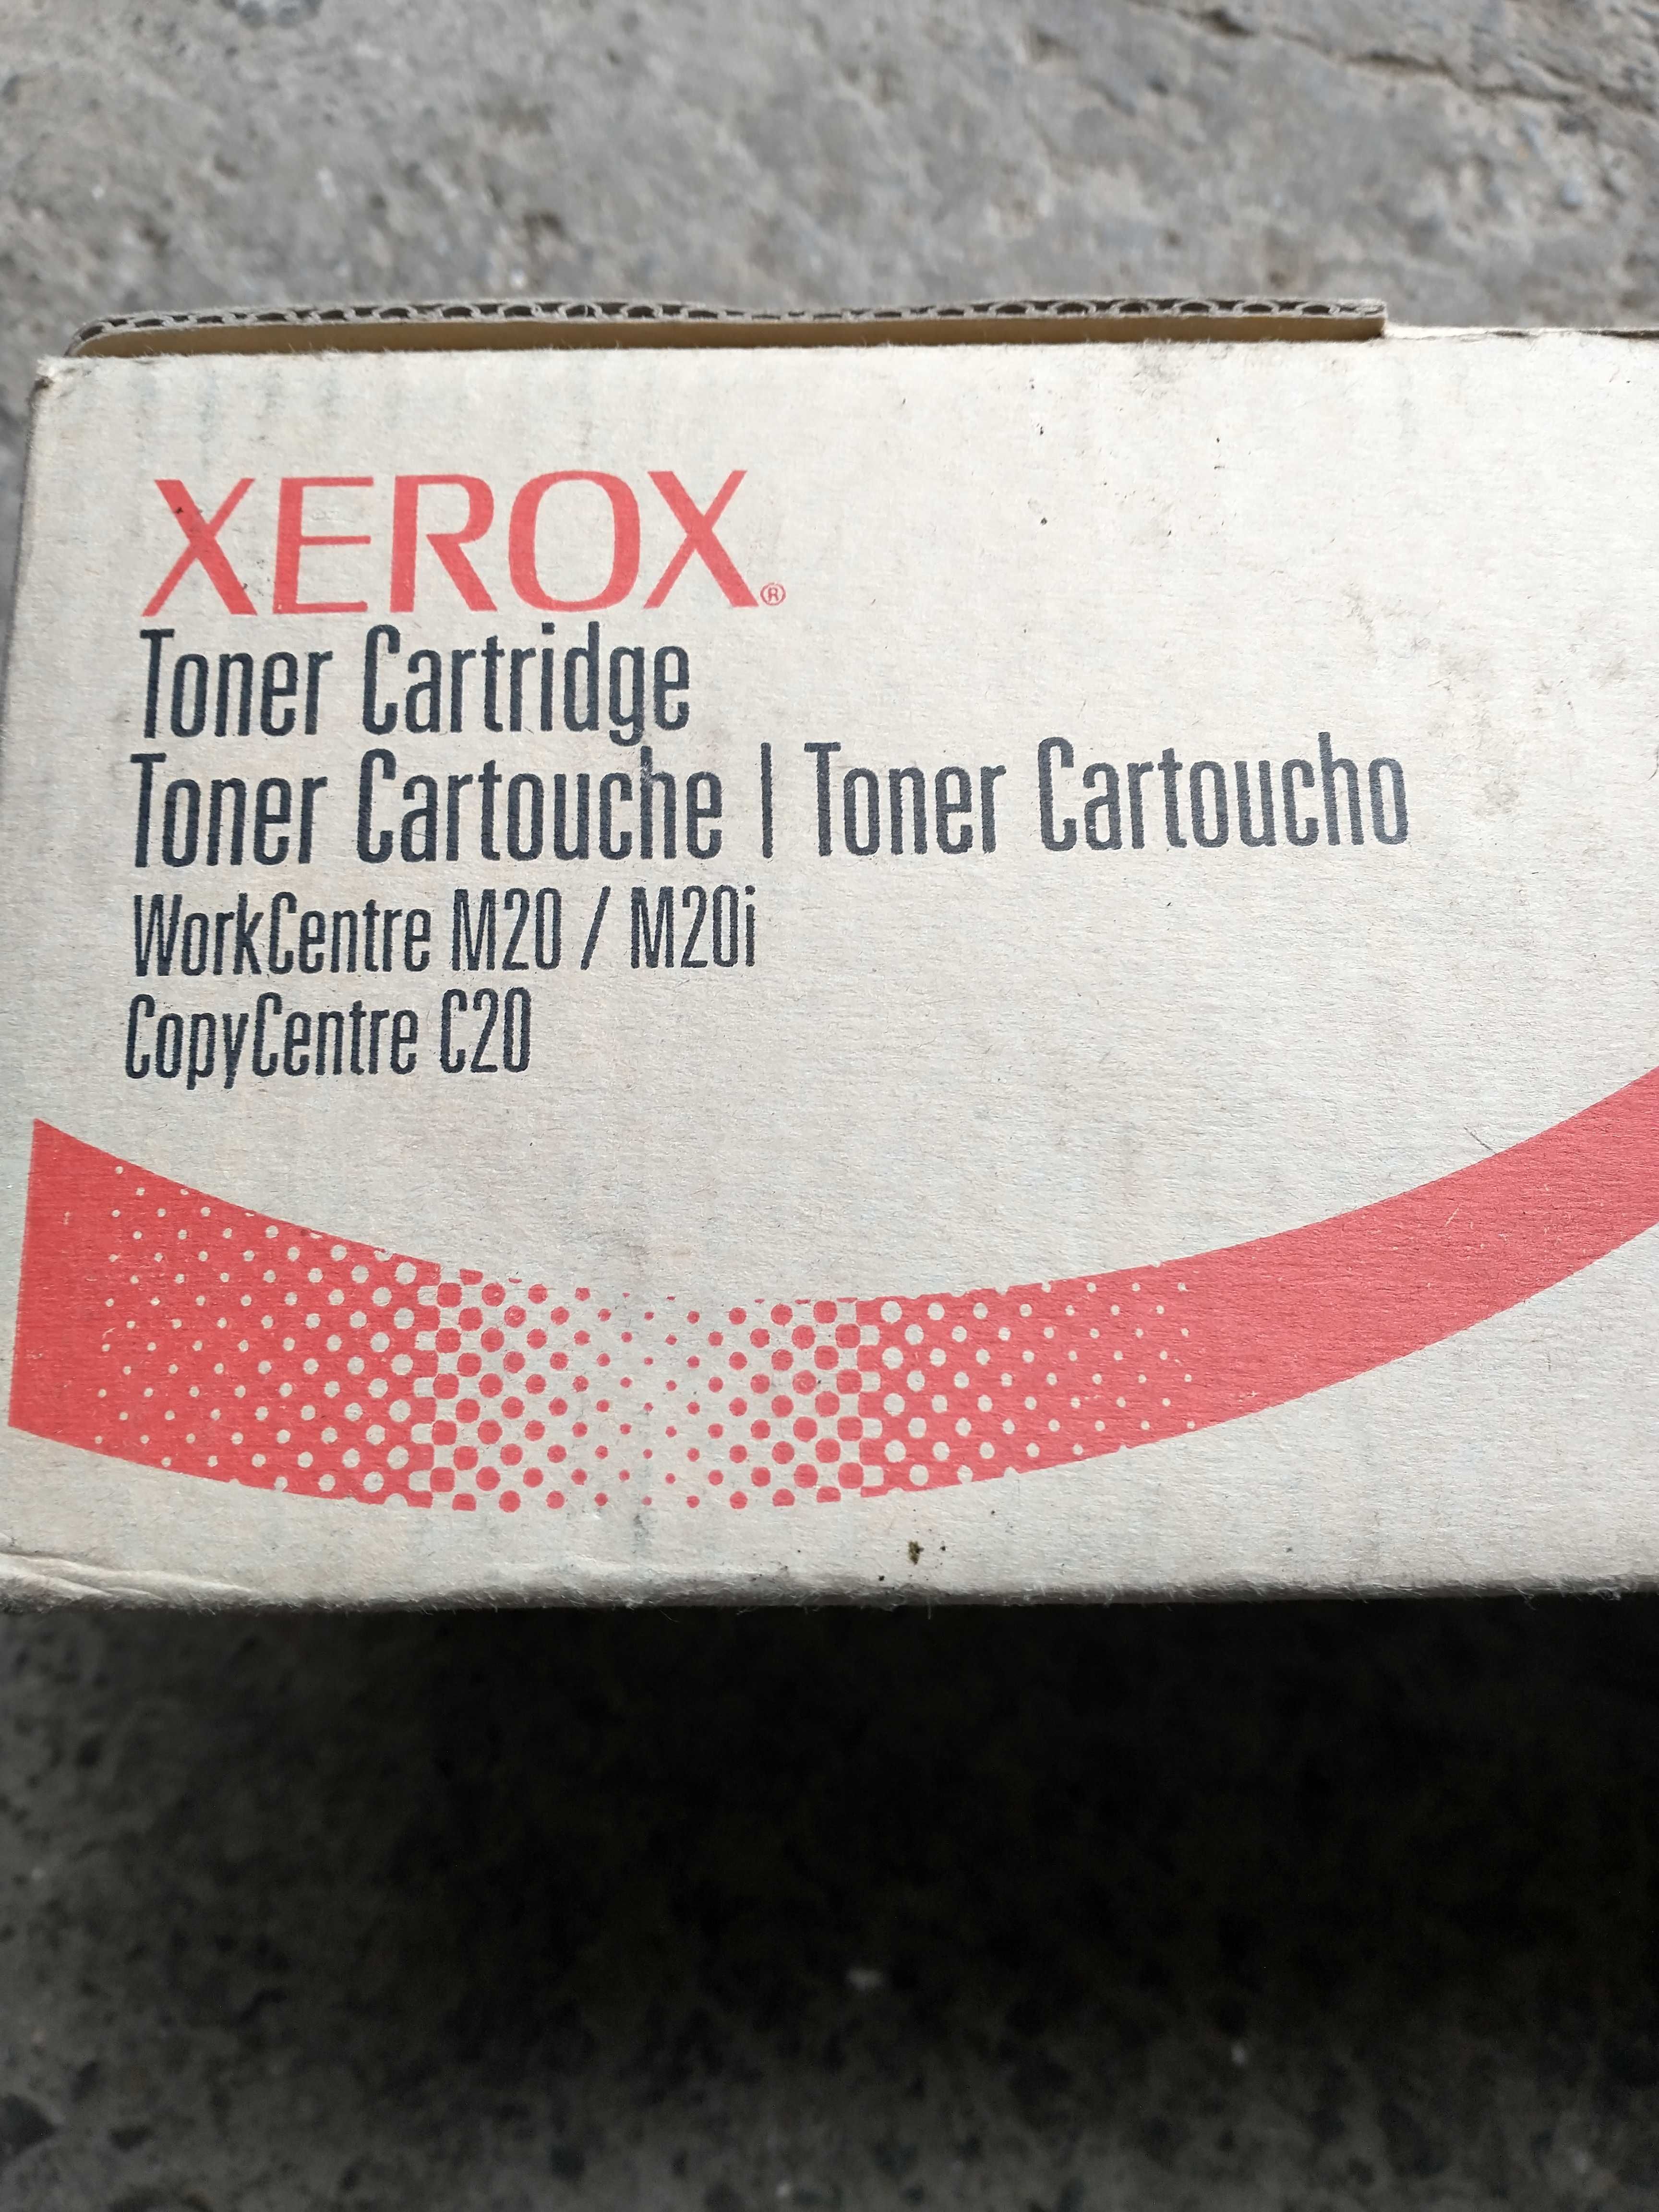 toner cartridge xerox